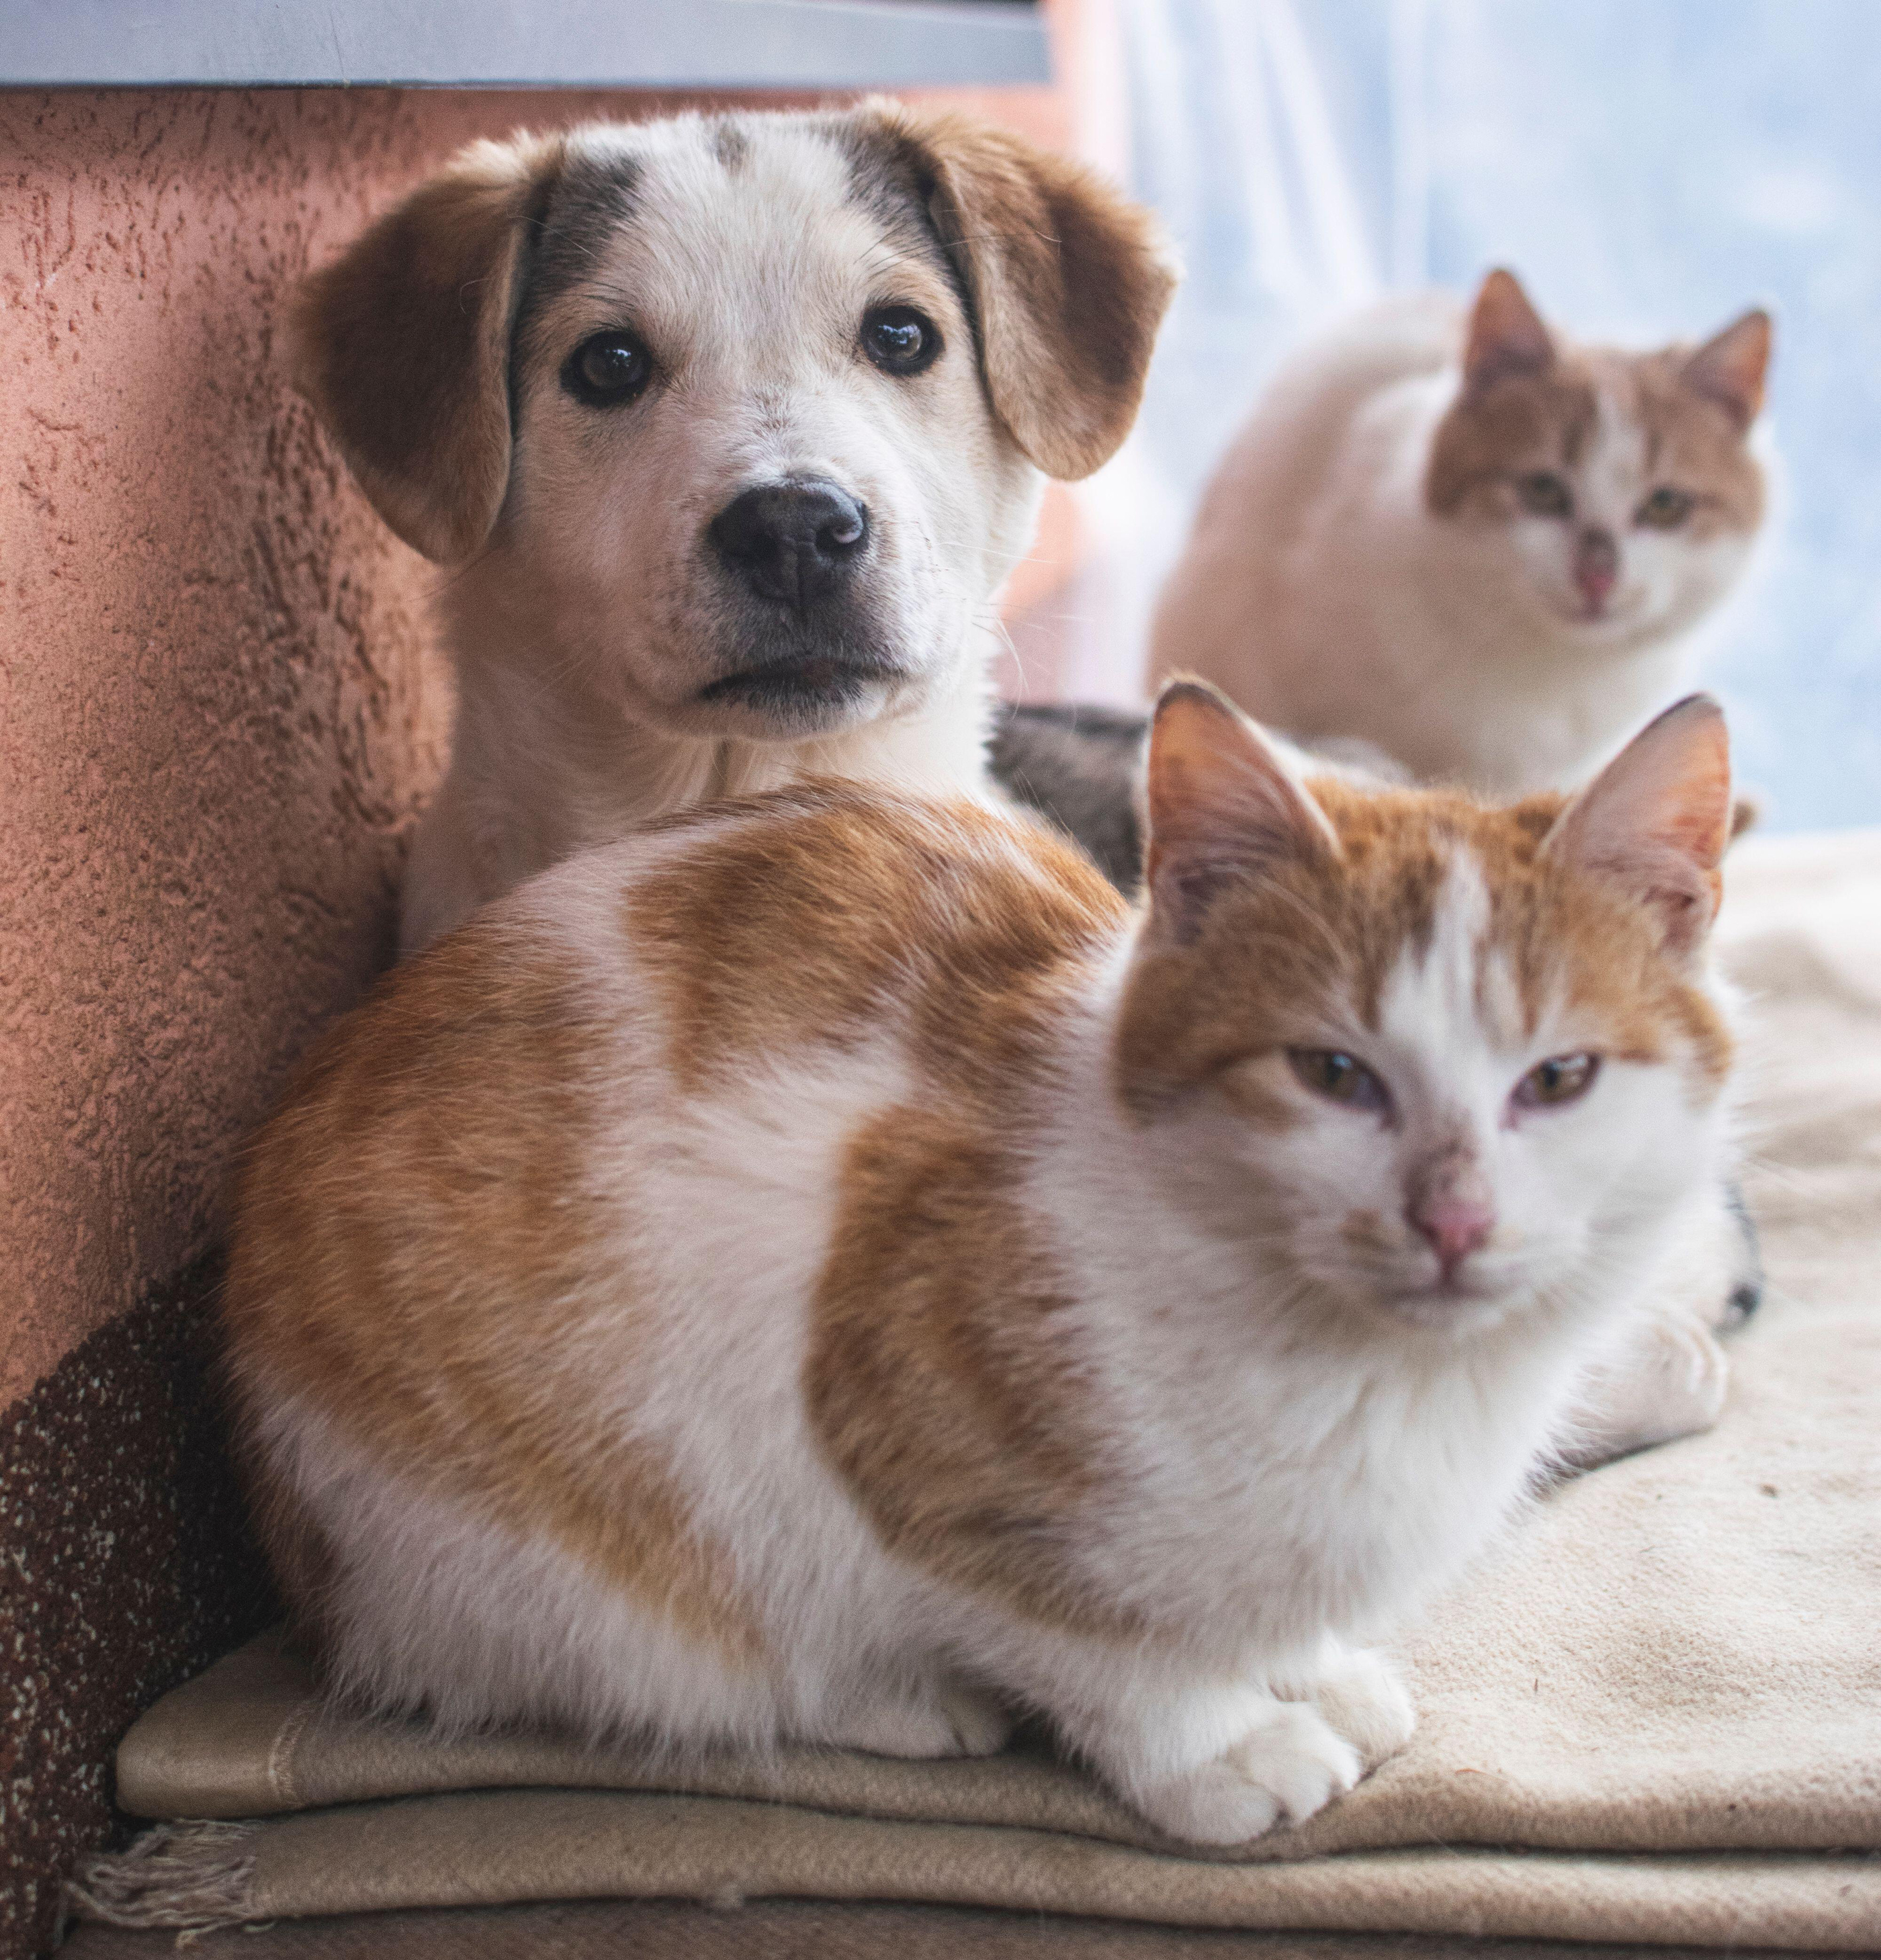 Cats sitting next to a dog (Alamy/PA)